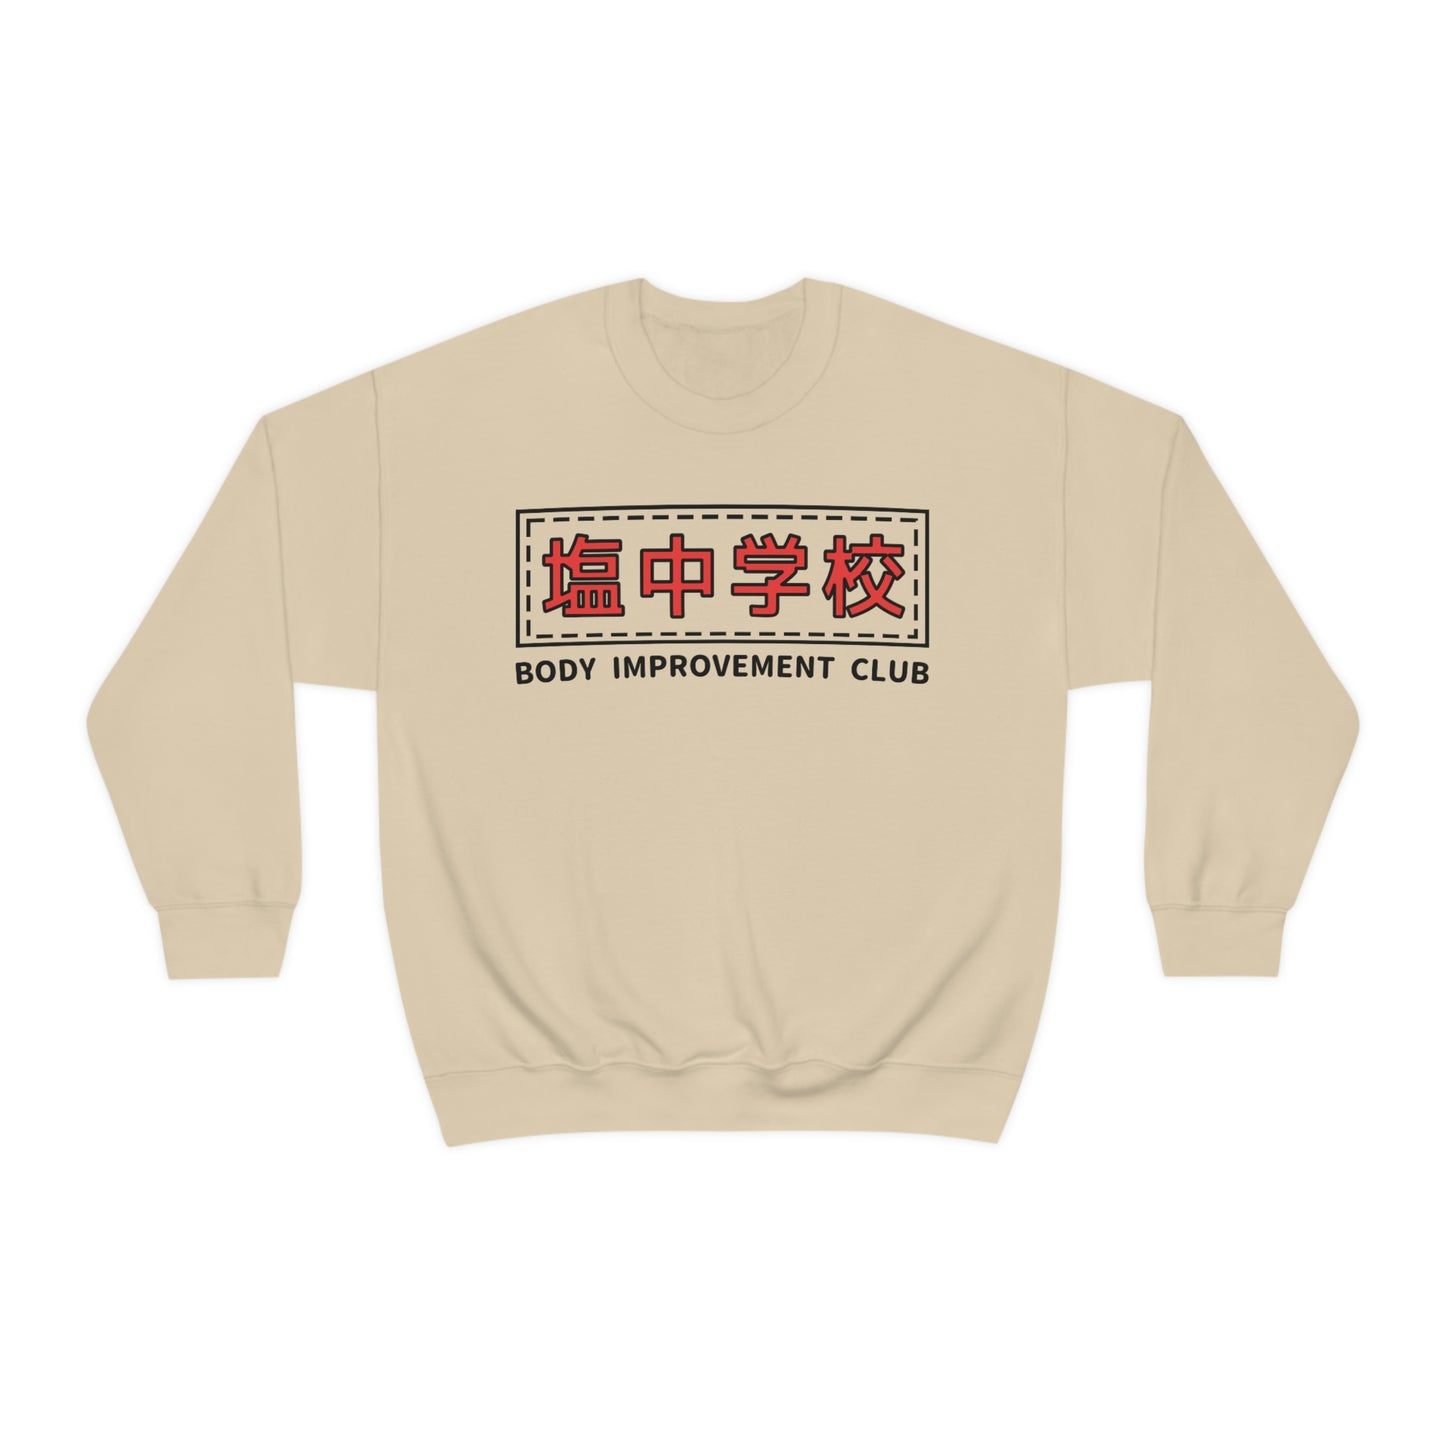 Body Improvement Club Sweatshirt Salt Middle Schools Psychos crew neck